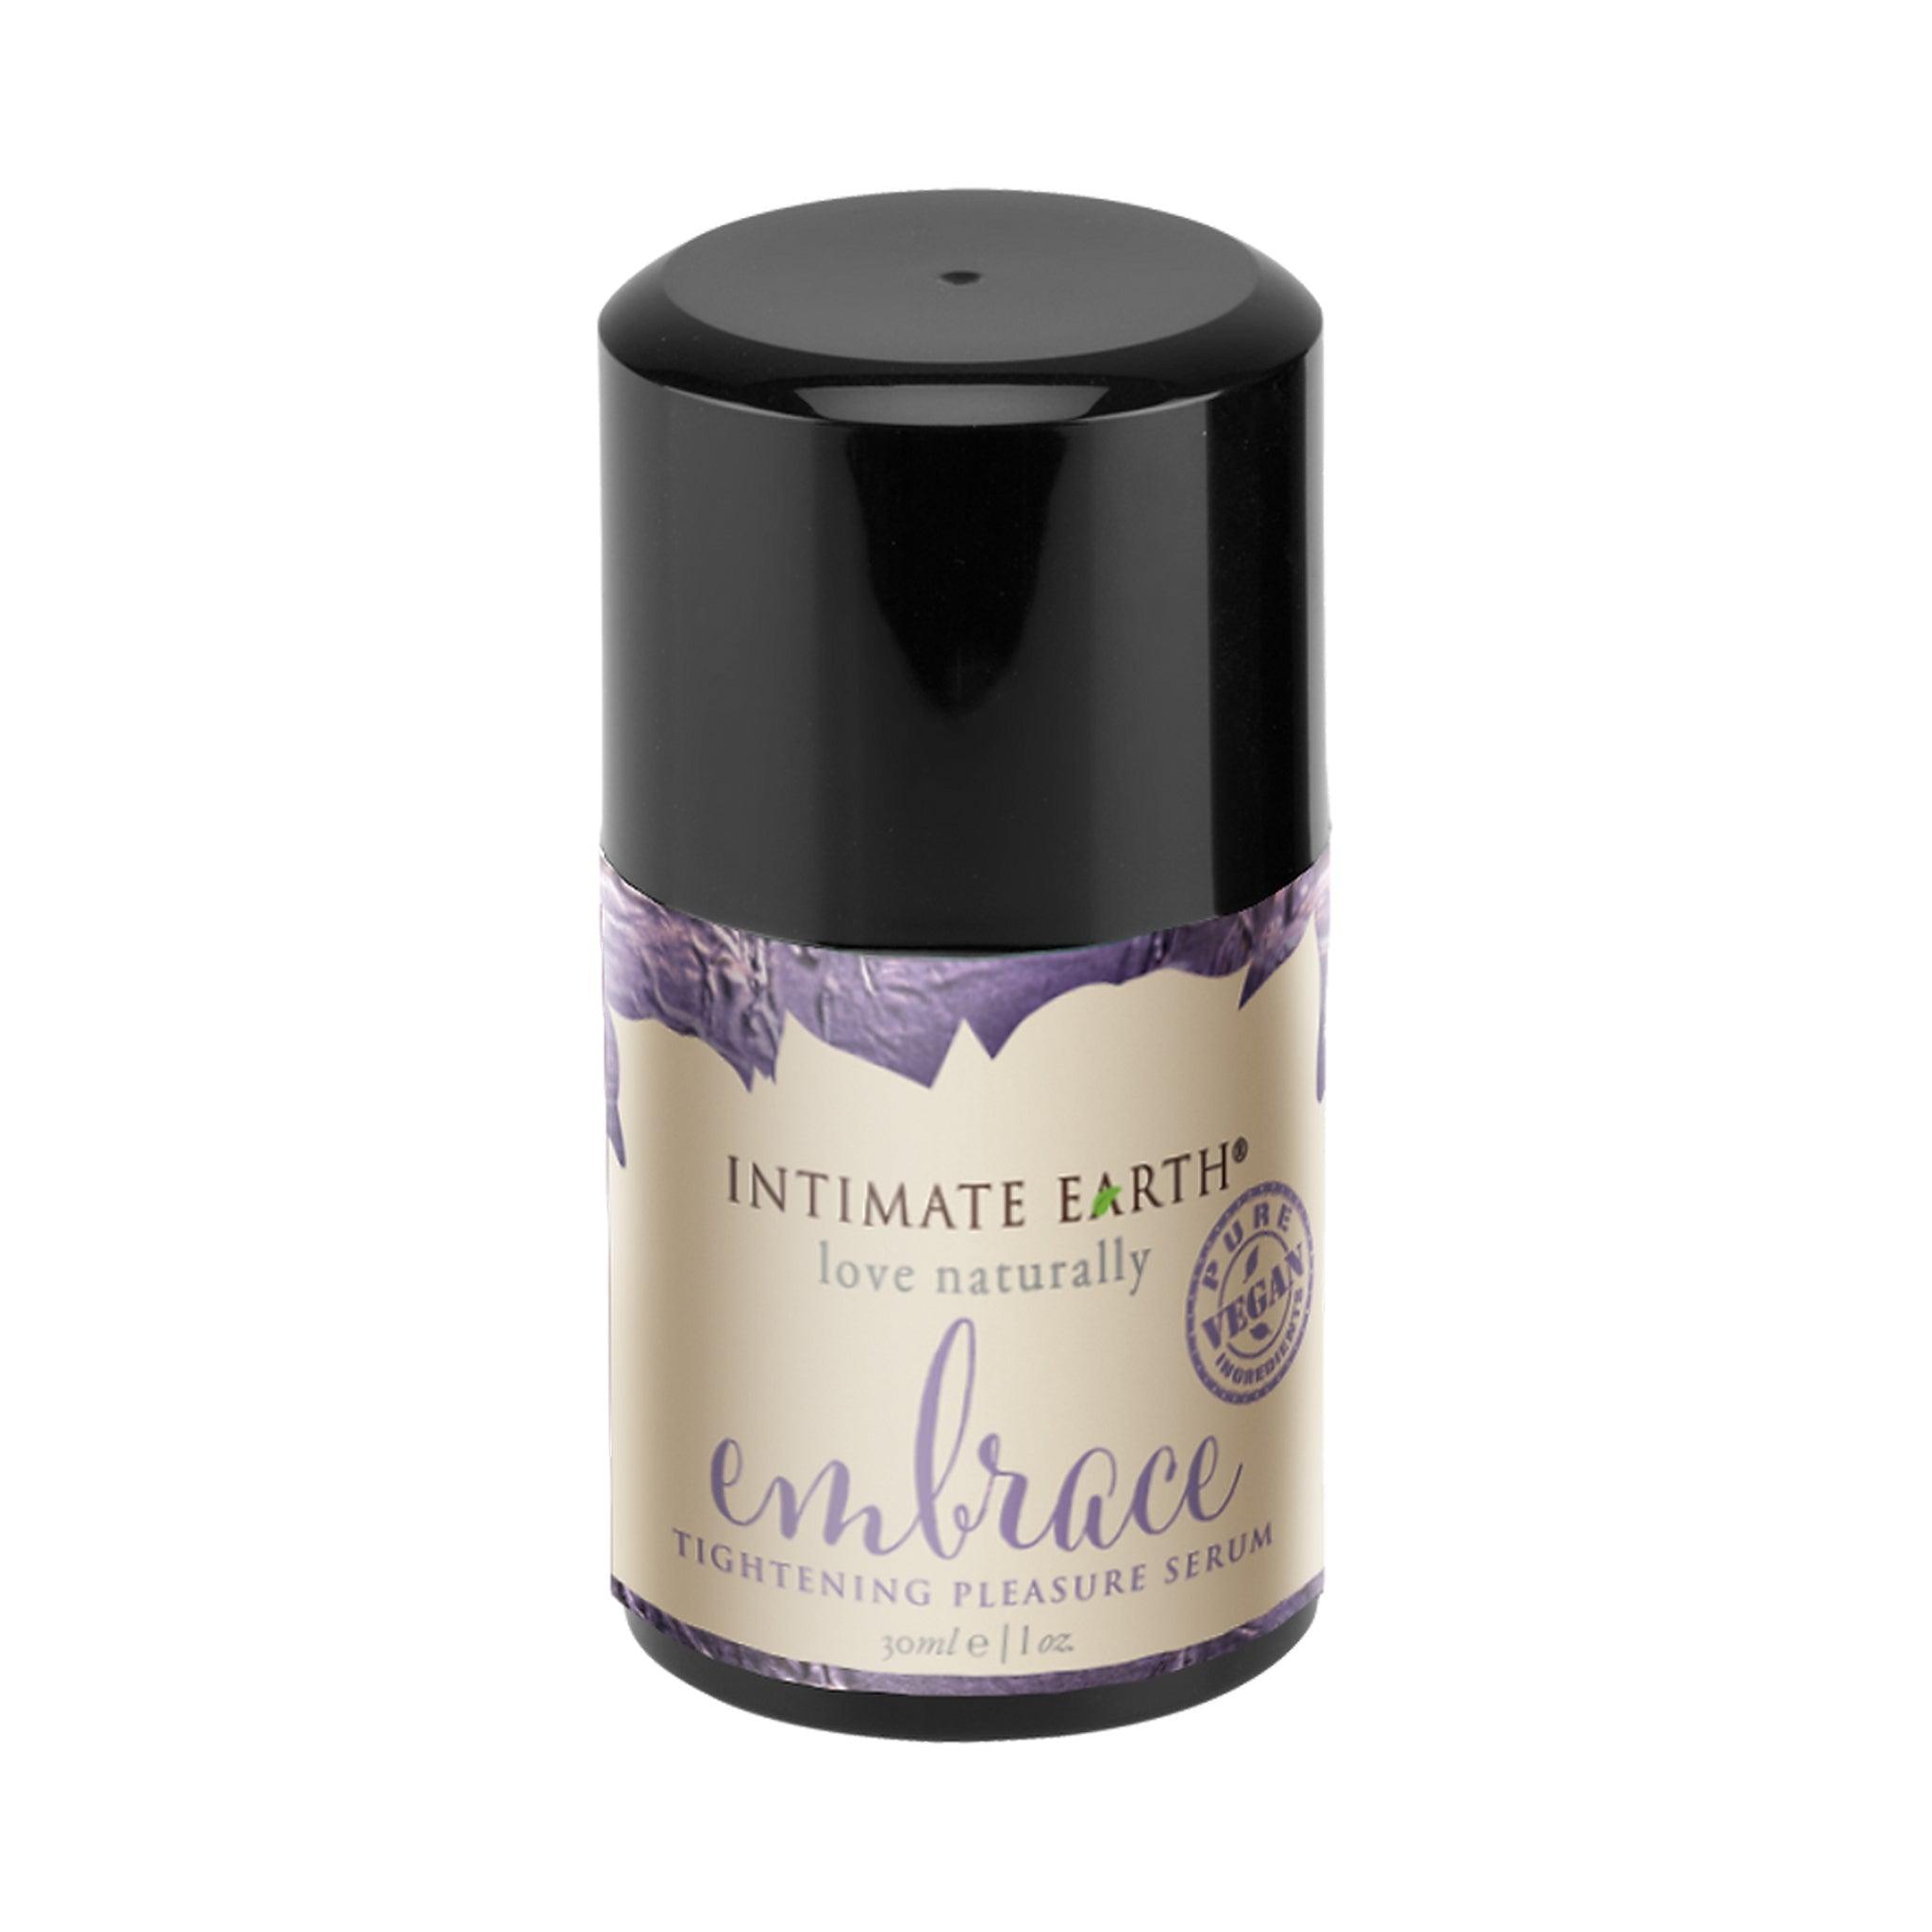 Intimate Earth Embrace Tightening Pleasure Serum 1 oz (30 mL) - CheapLubes.com